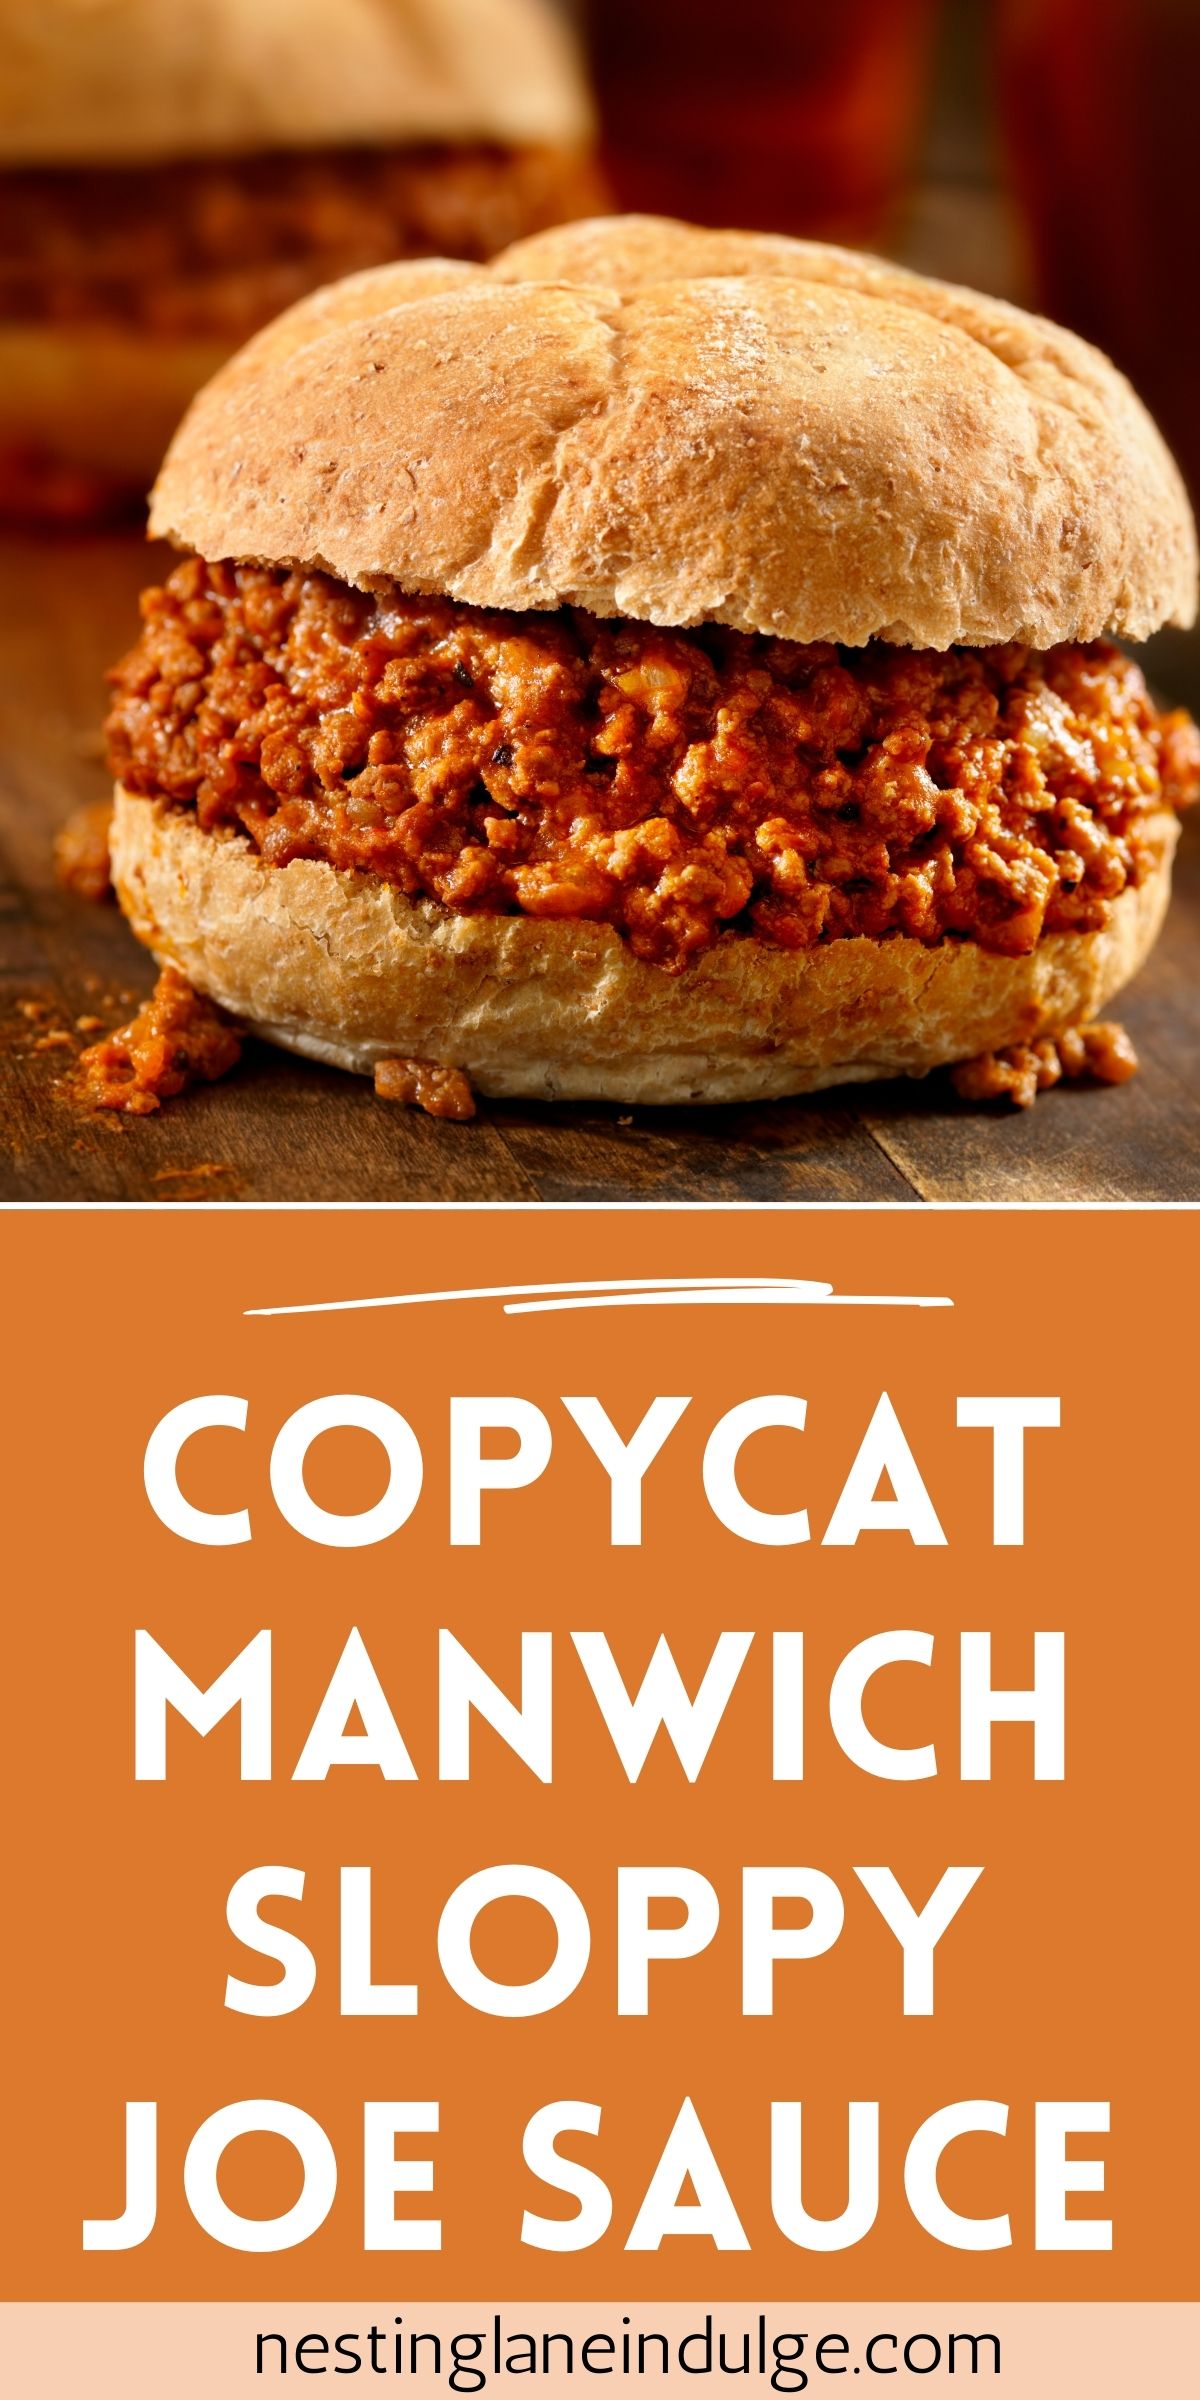 Graphic for Pinterest of Copycat Manwich Sloppy Joe Sauce Recipe.